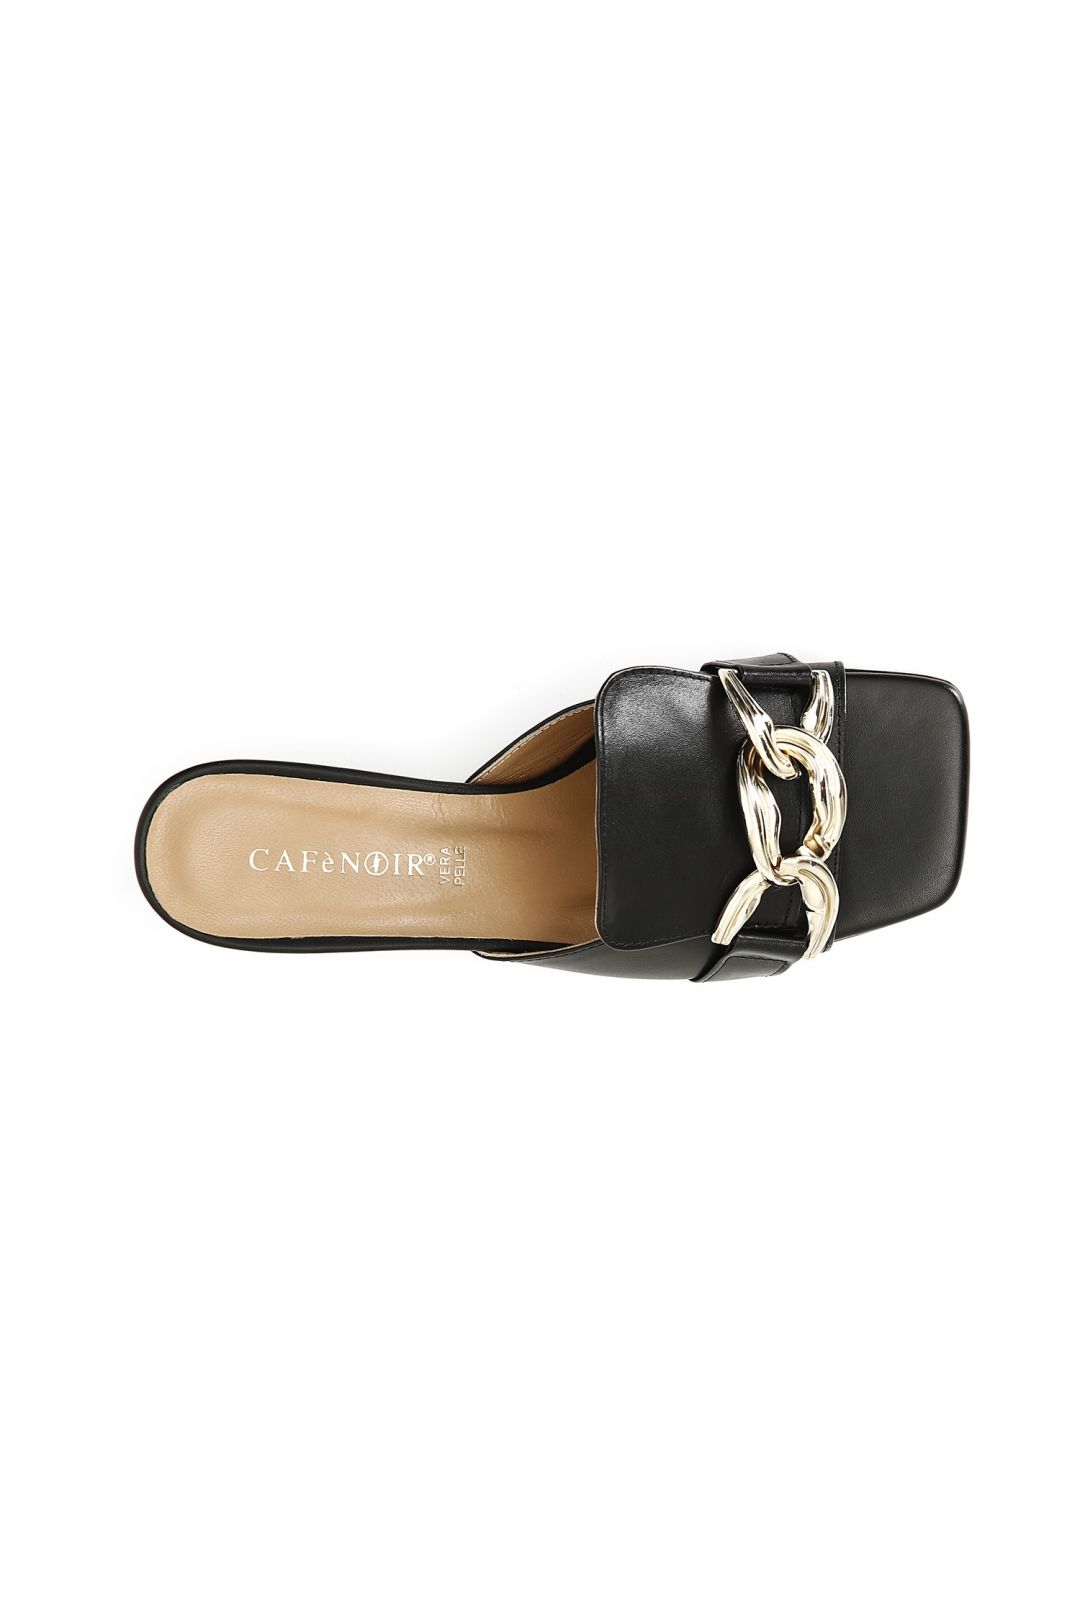 CafèNoir leather slipper with chain C1 LB4207 N001 black